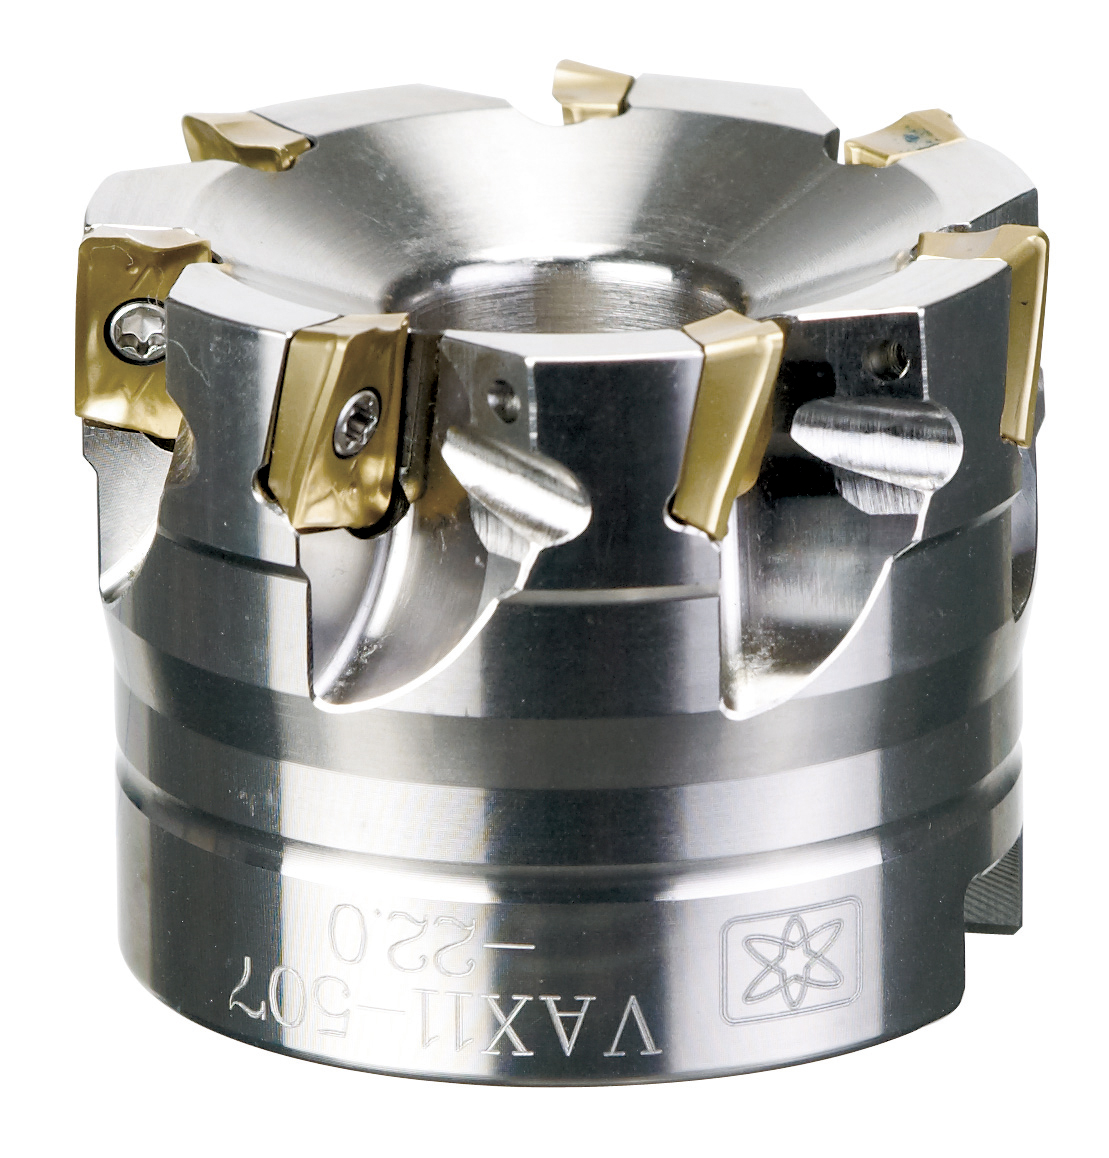 Catalog|VAX (R390-11T3 / R390-1704) Shoulder Milling (arbor milling)